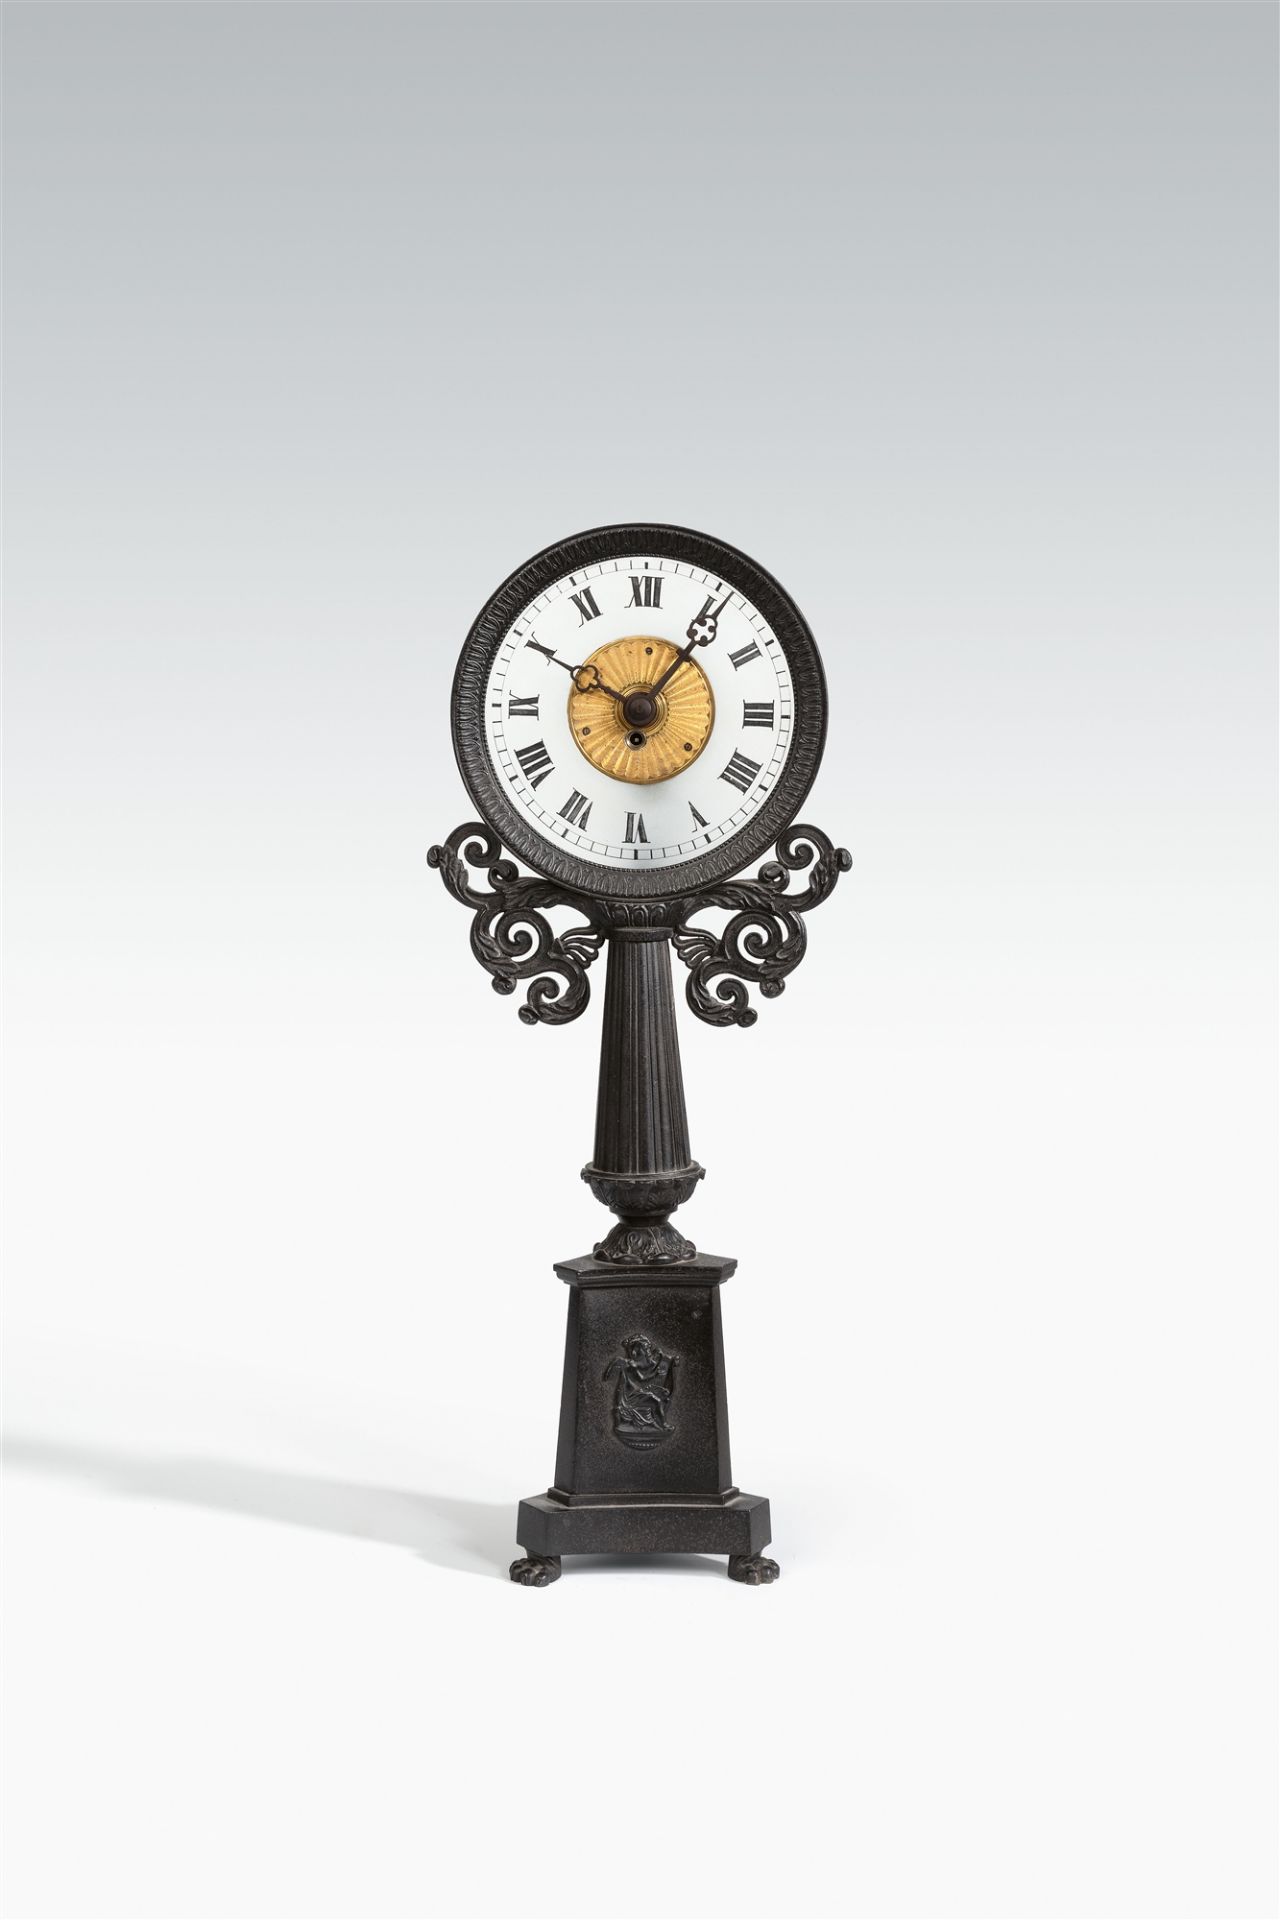 A cast iron night clock "Trespied"